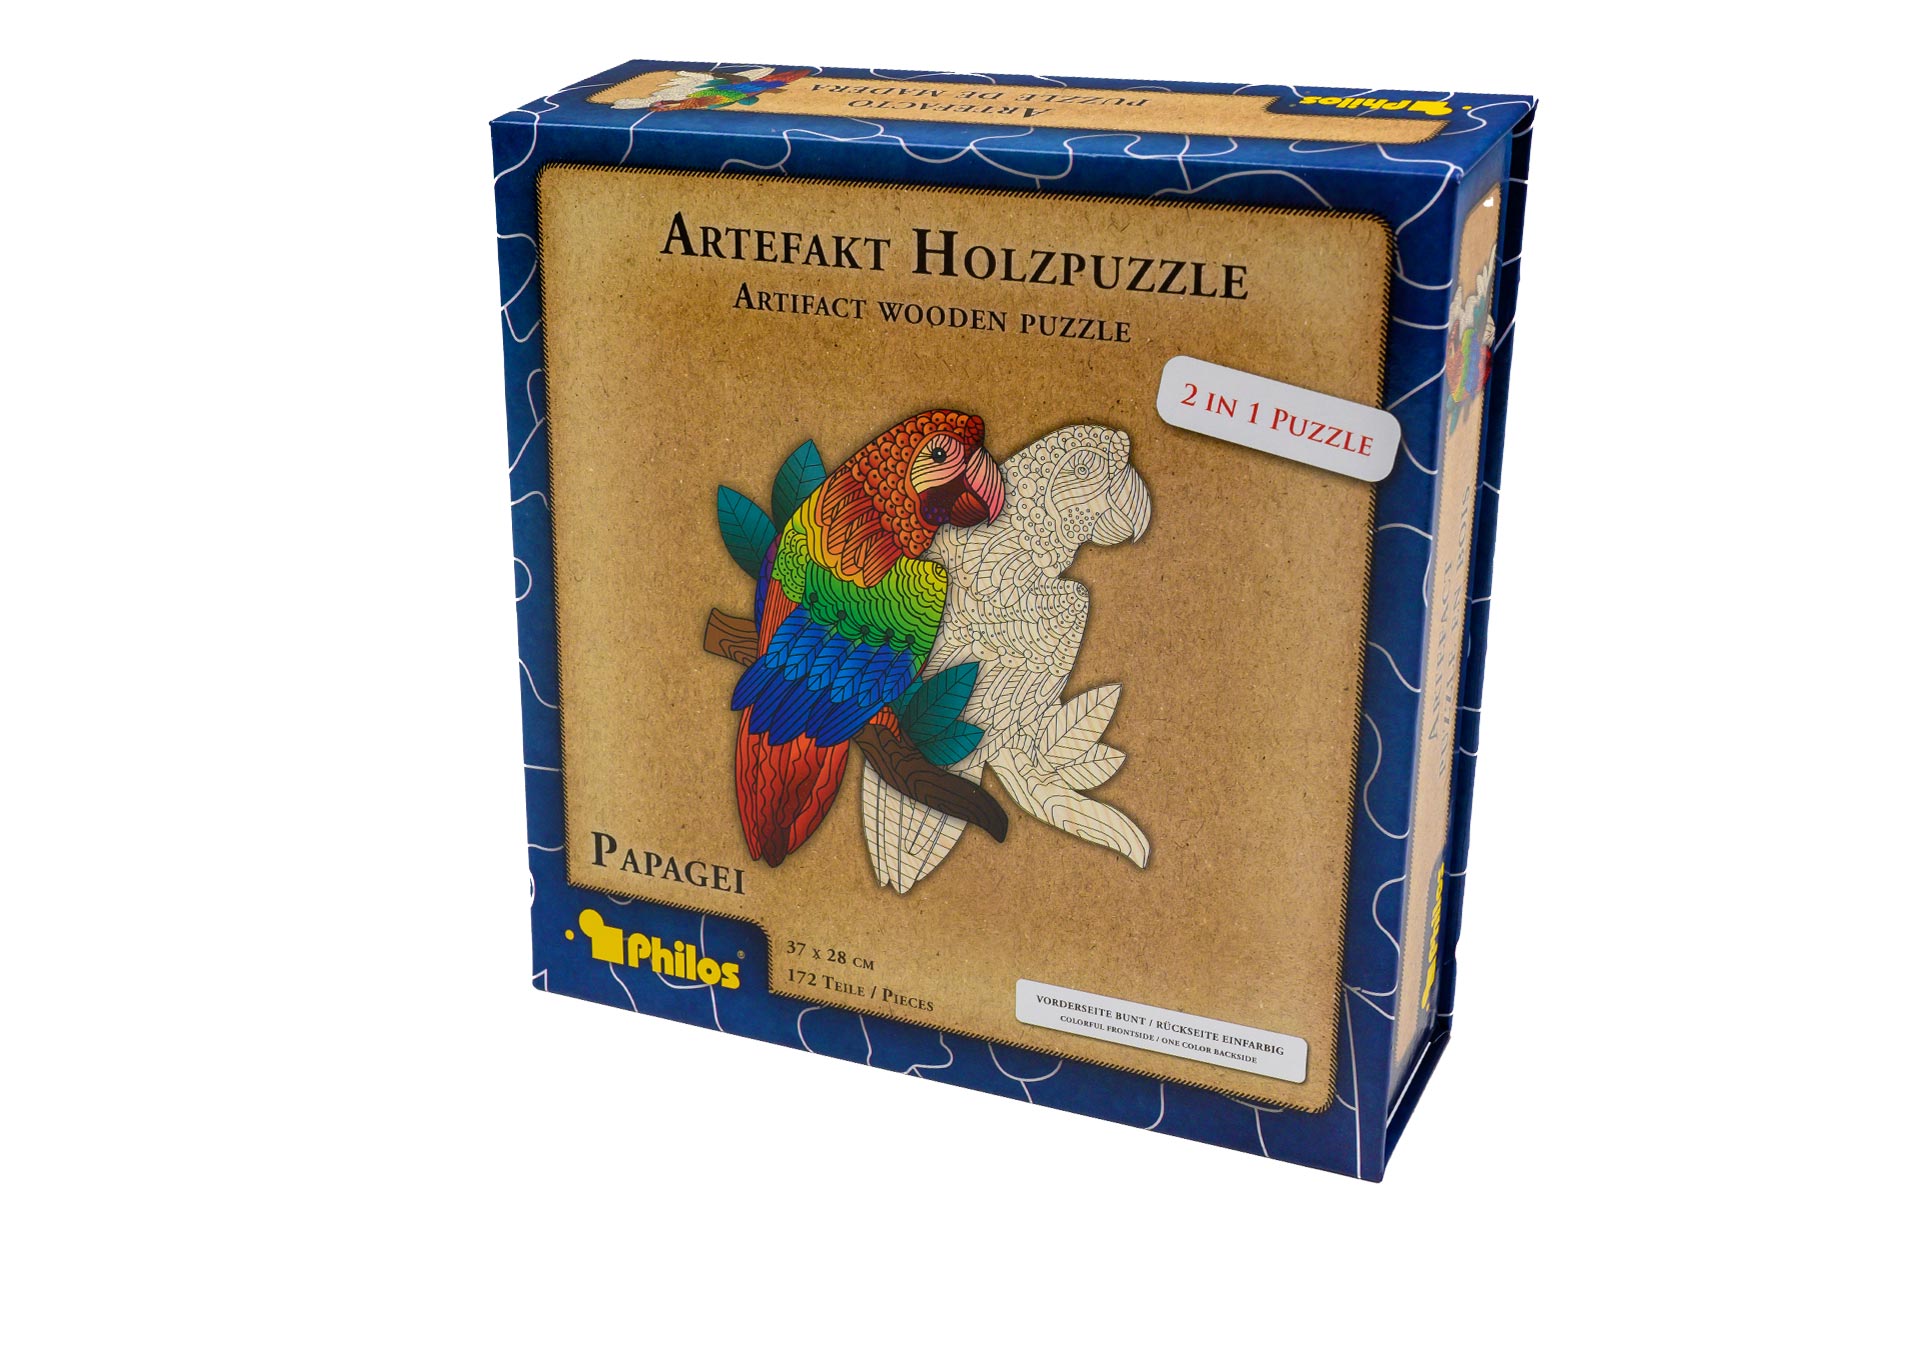 Artefakt Holzpuzzle 2 in 1 Papagei, 172 Teile,in magnetischer Klappschachtel